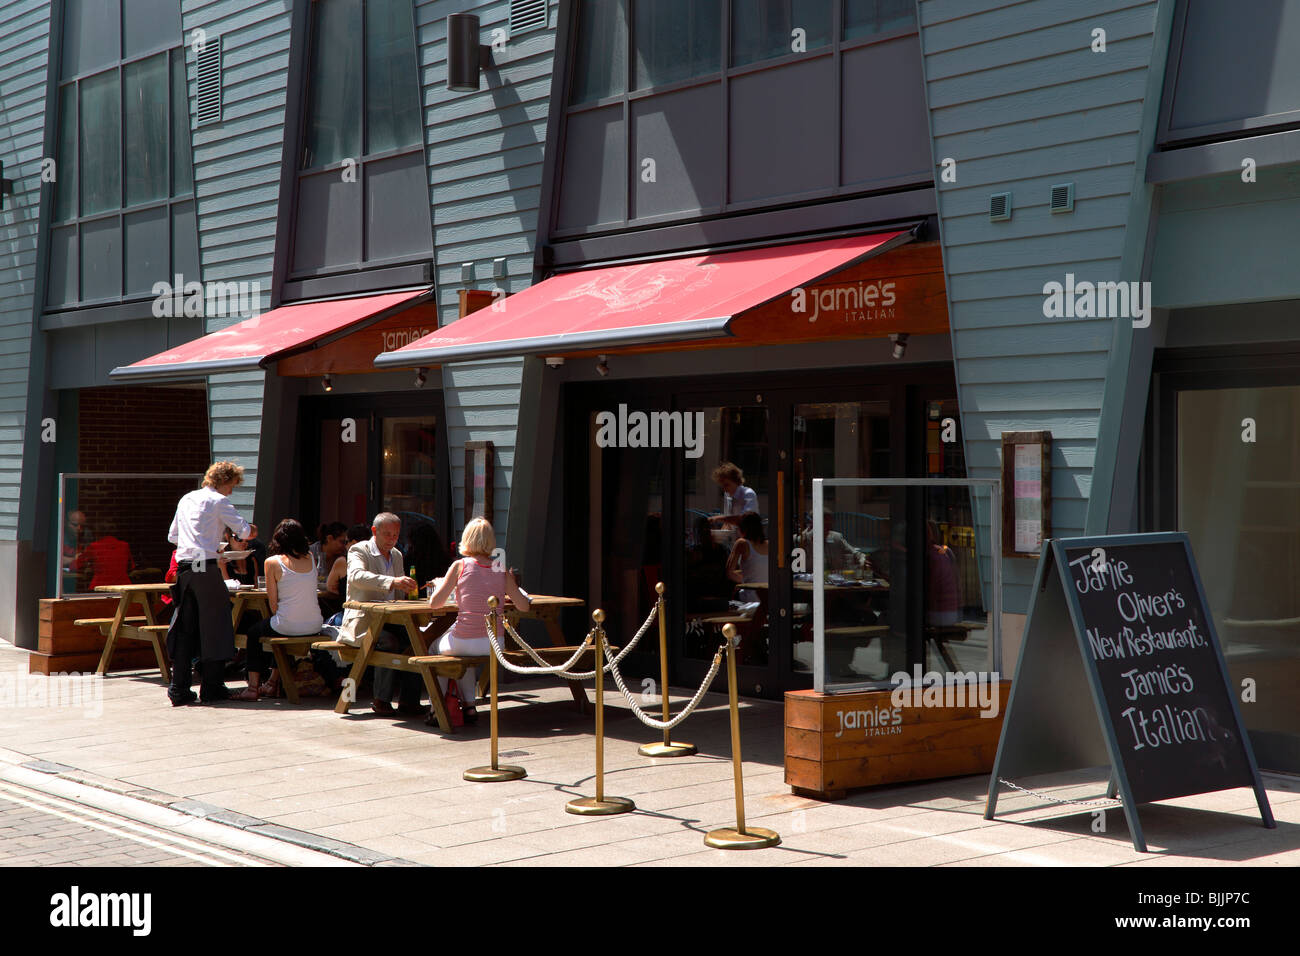 England, East Sussex, Brighton, Black Lion Street, Exterior of Jamie's Italian Restaurant. Stock Photo